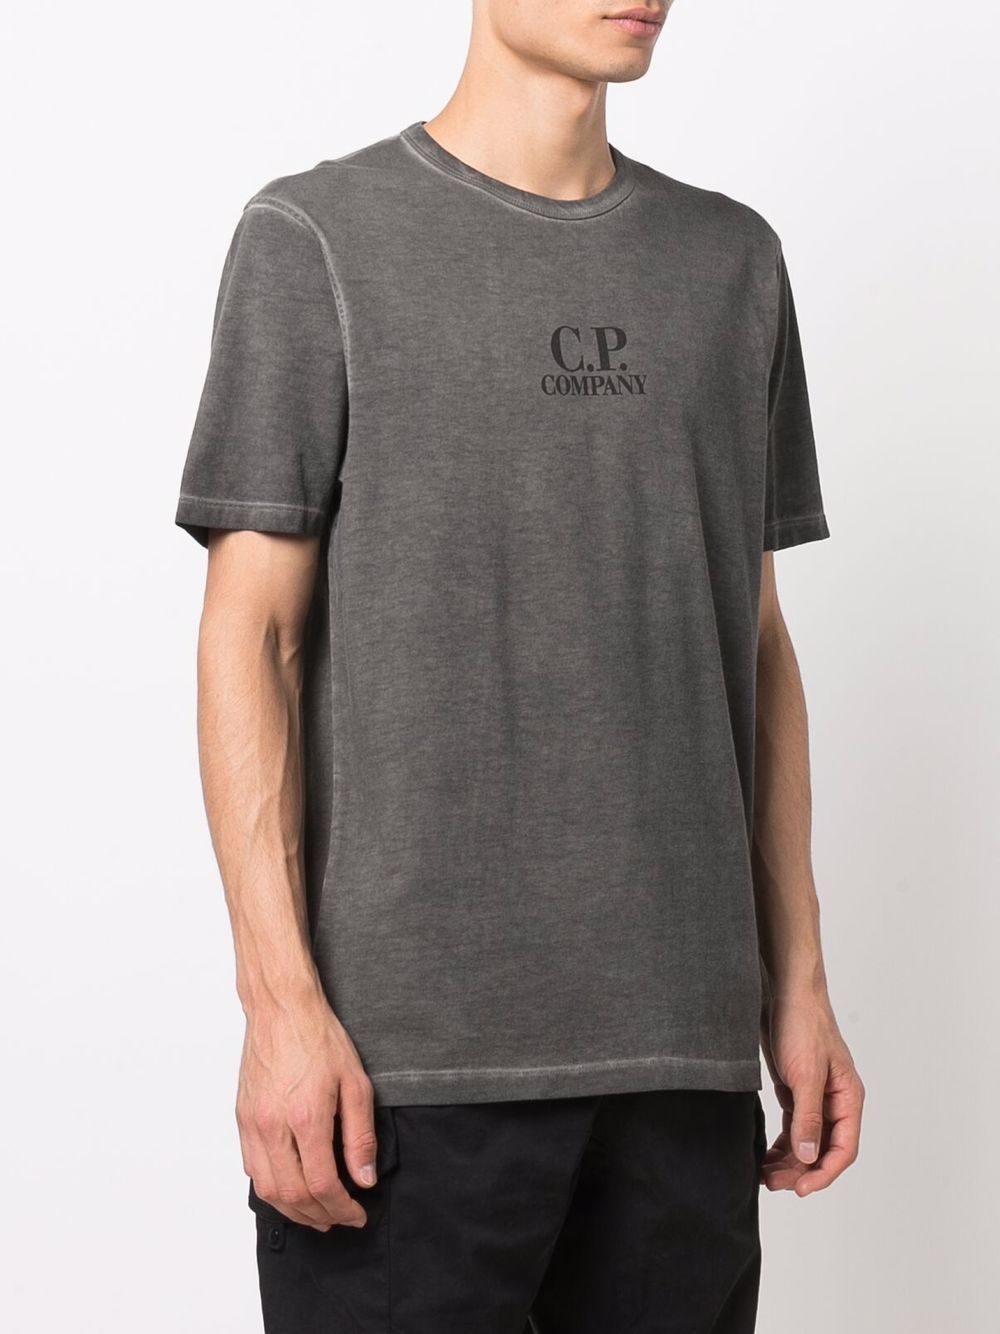 C.P. COMPANY Logo T-Shirt Black - MAISONDEFASHION.COM